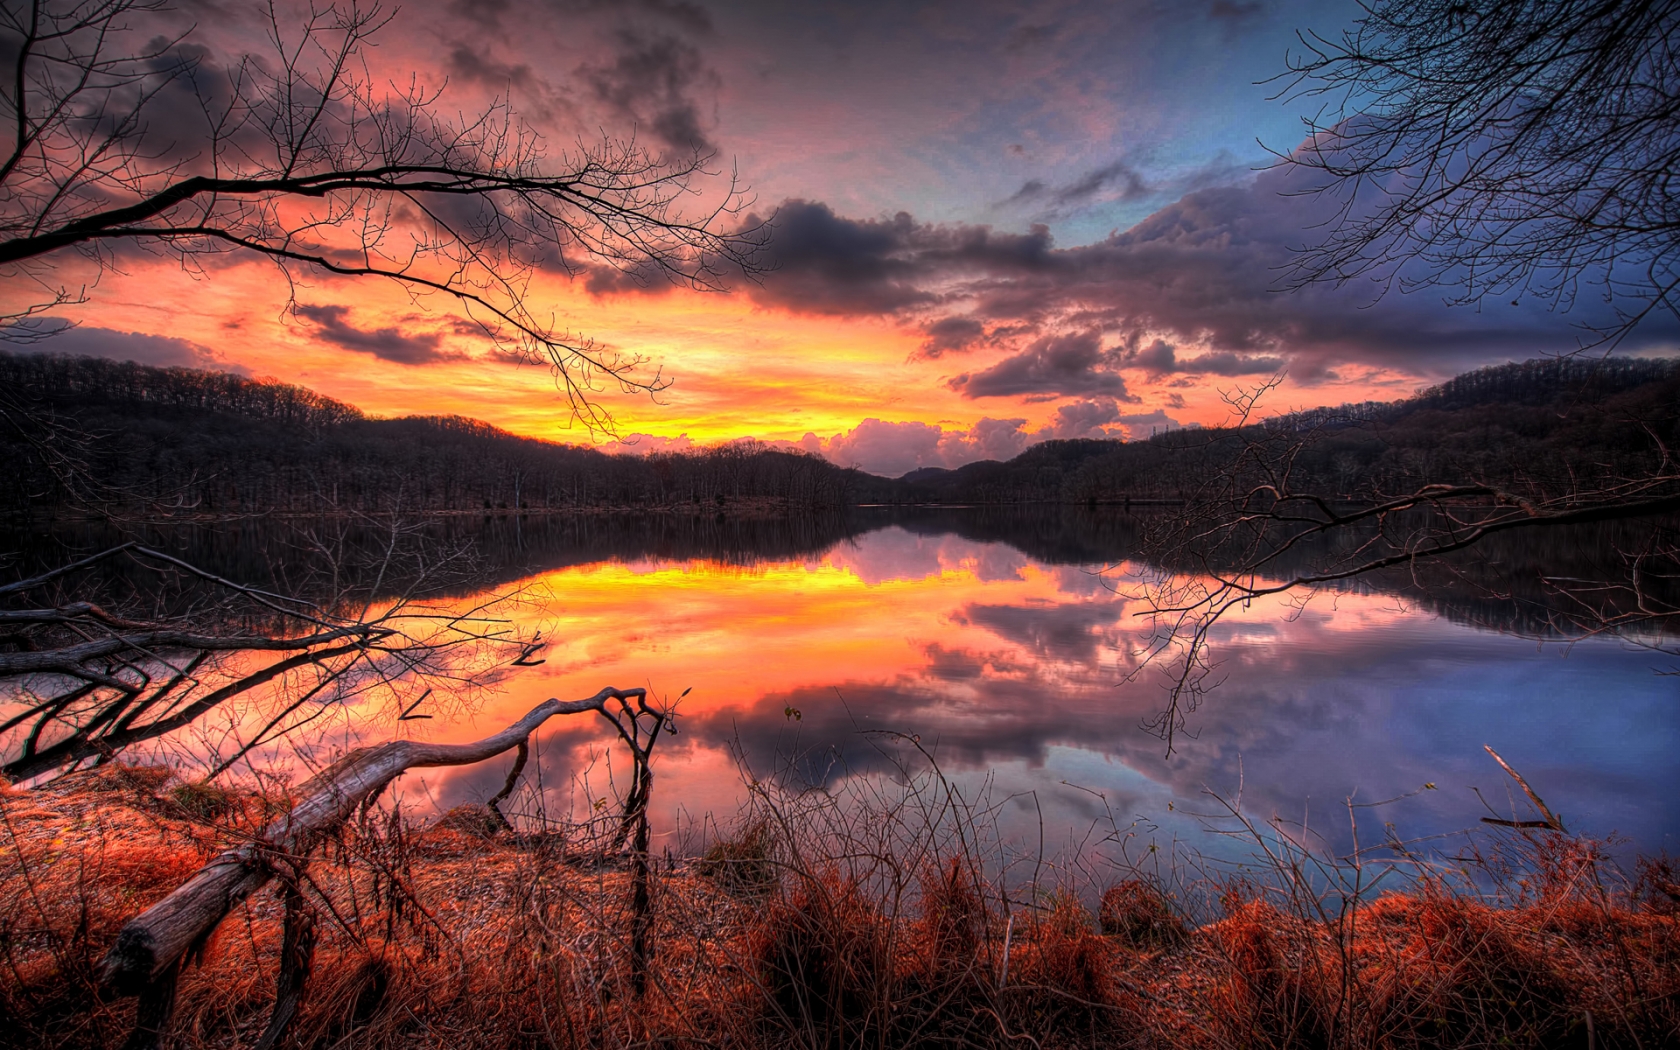 Fire Sunset Reflection for 1680 x 1050 widescreen resolution